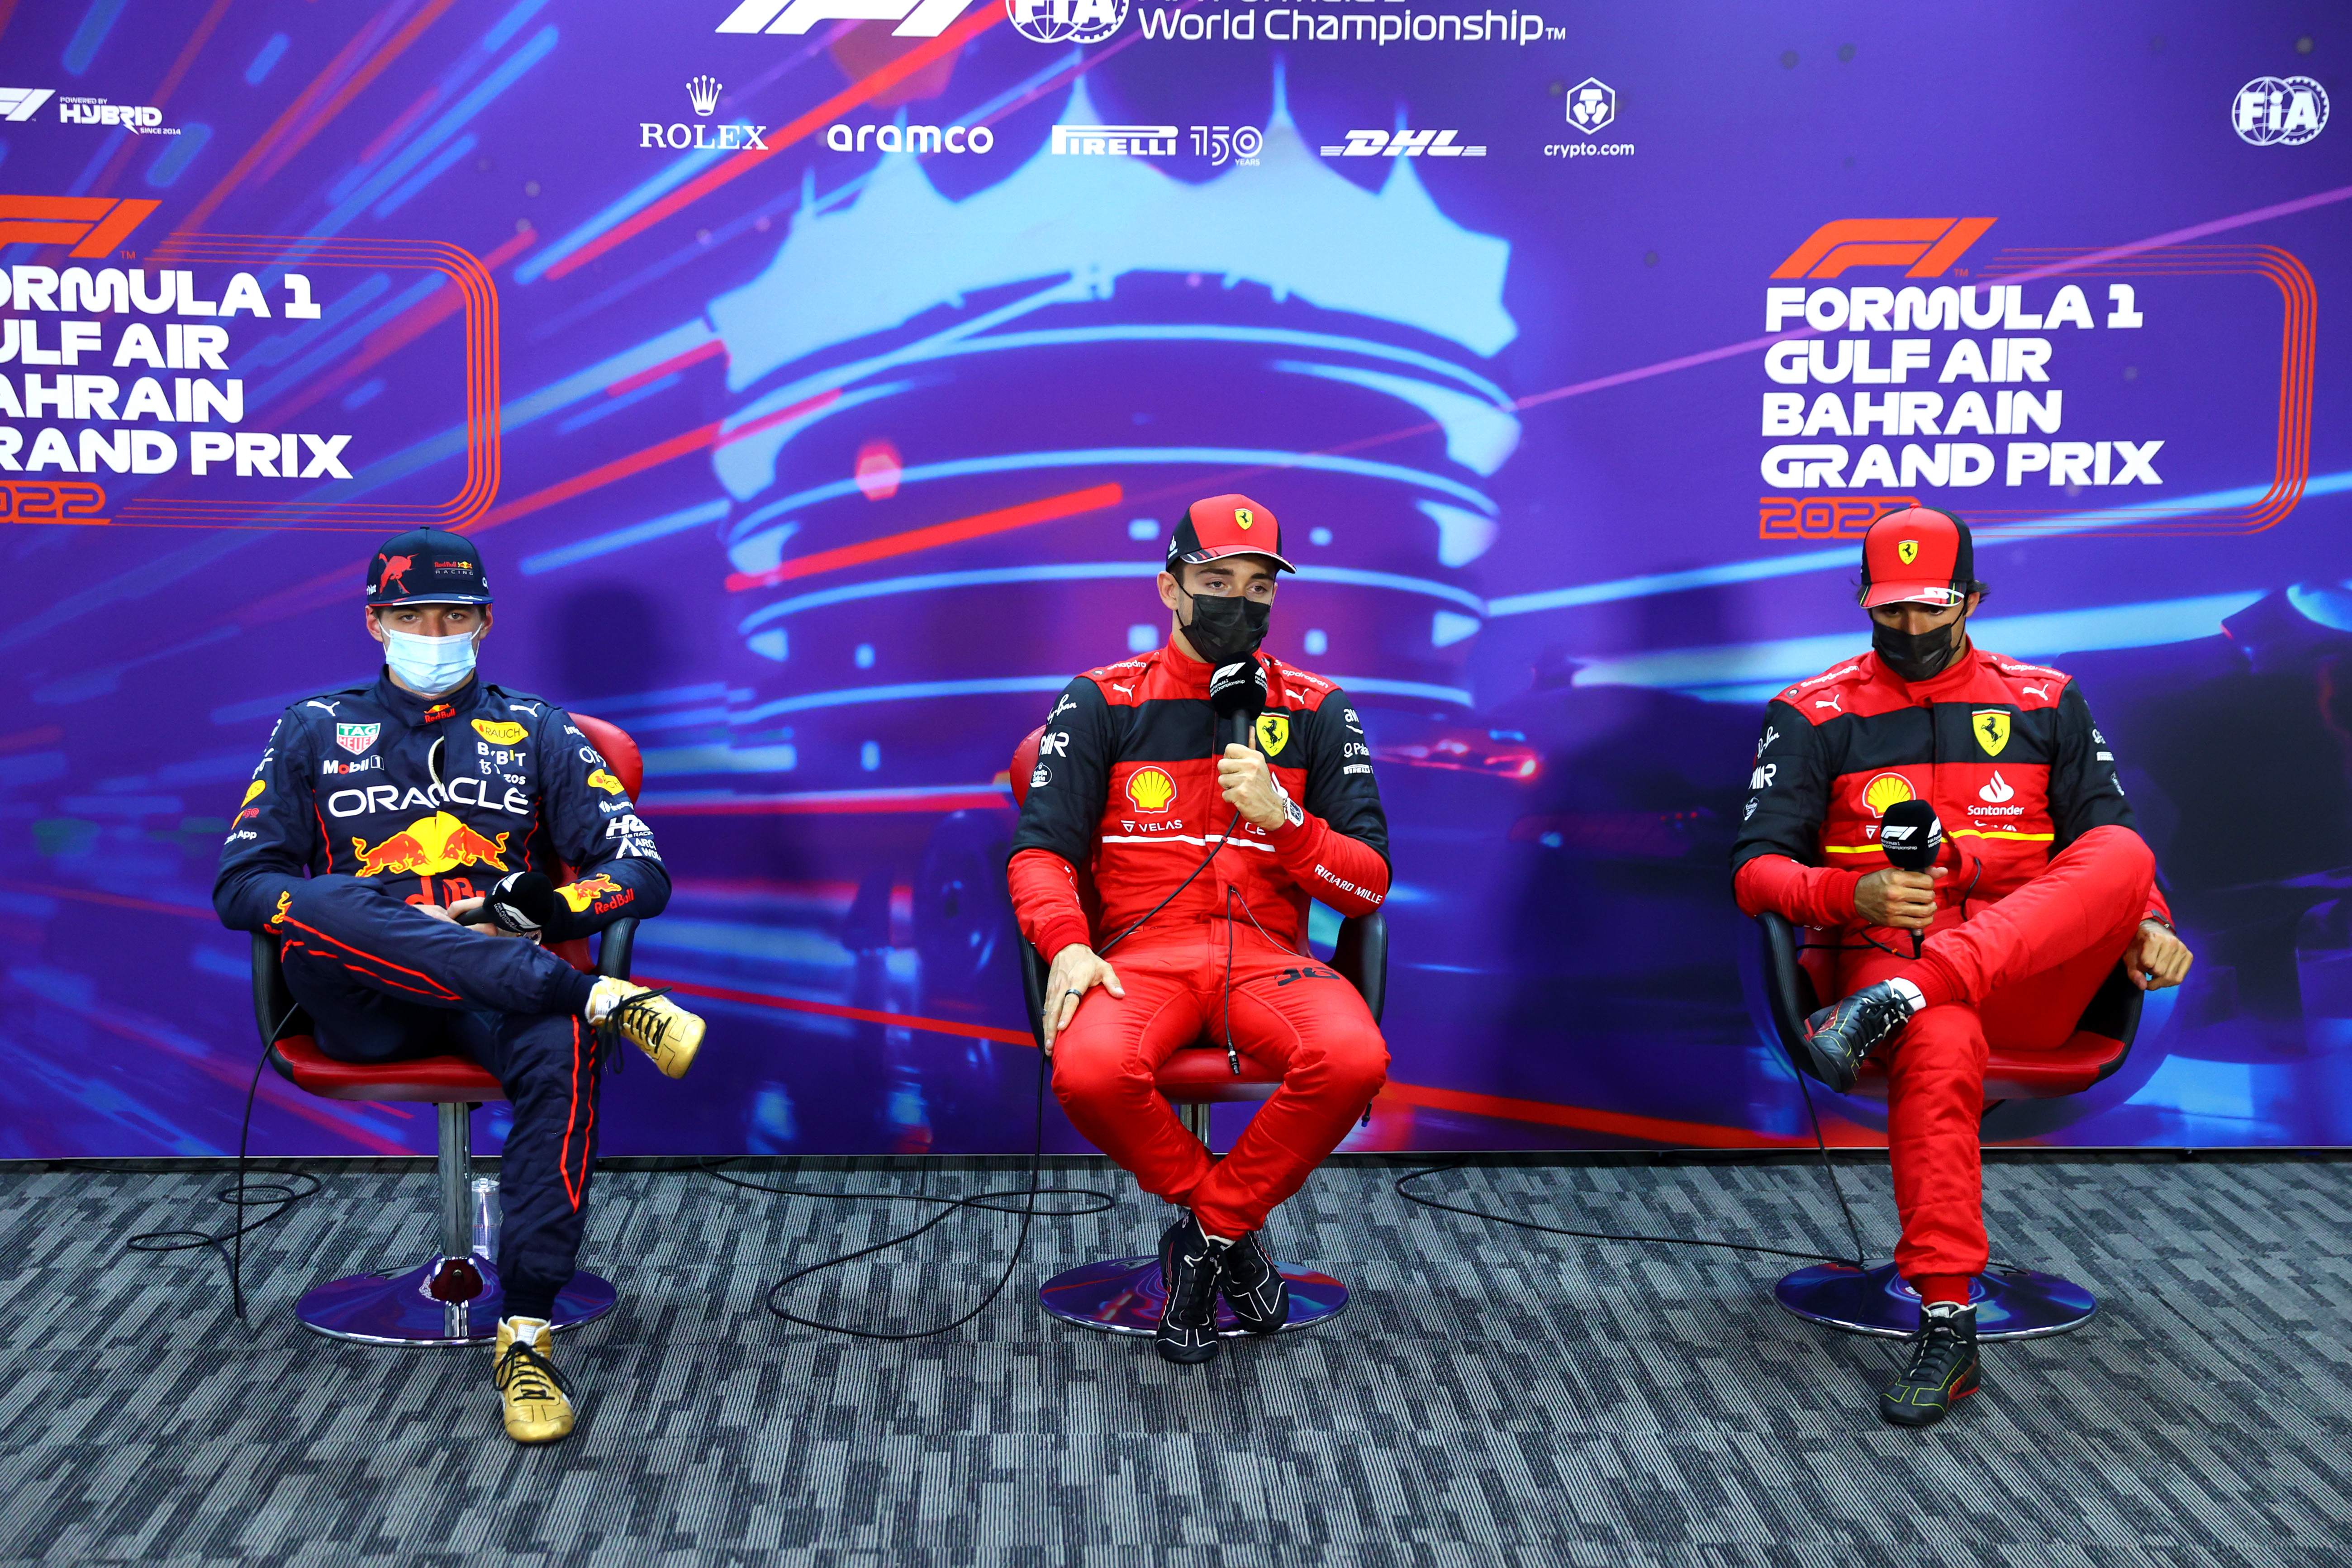 F1, Carlos Sainz, Ferrari, Max Verstappen, Charles Leclerc, Red Bull, world championship